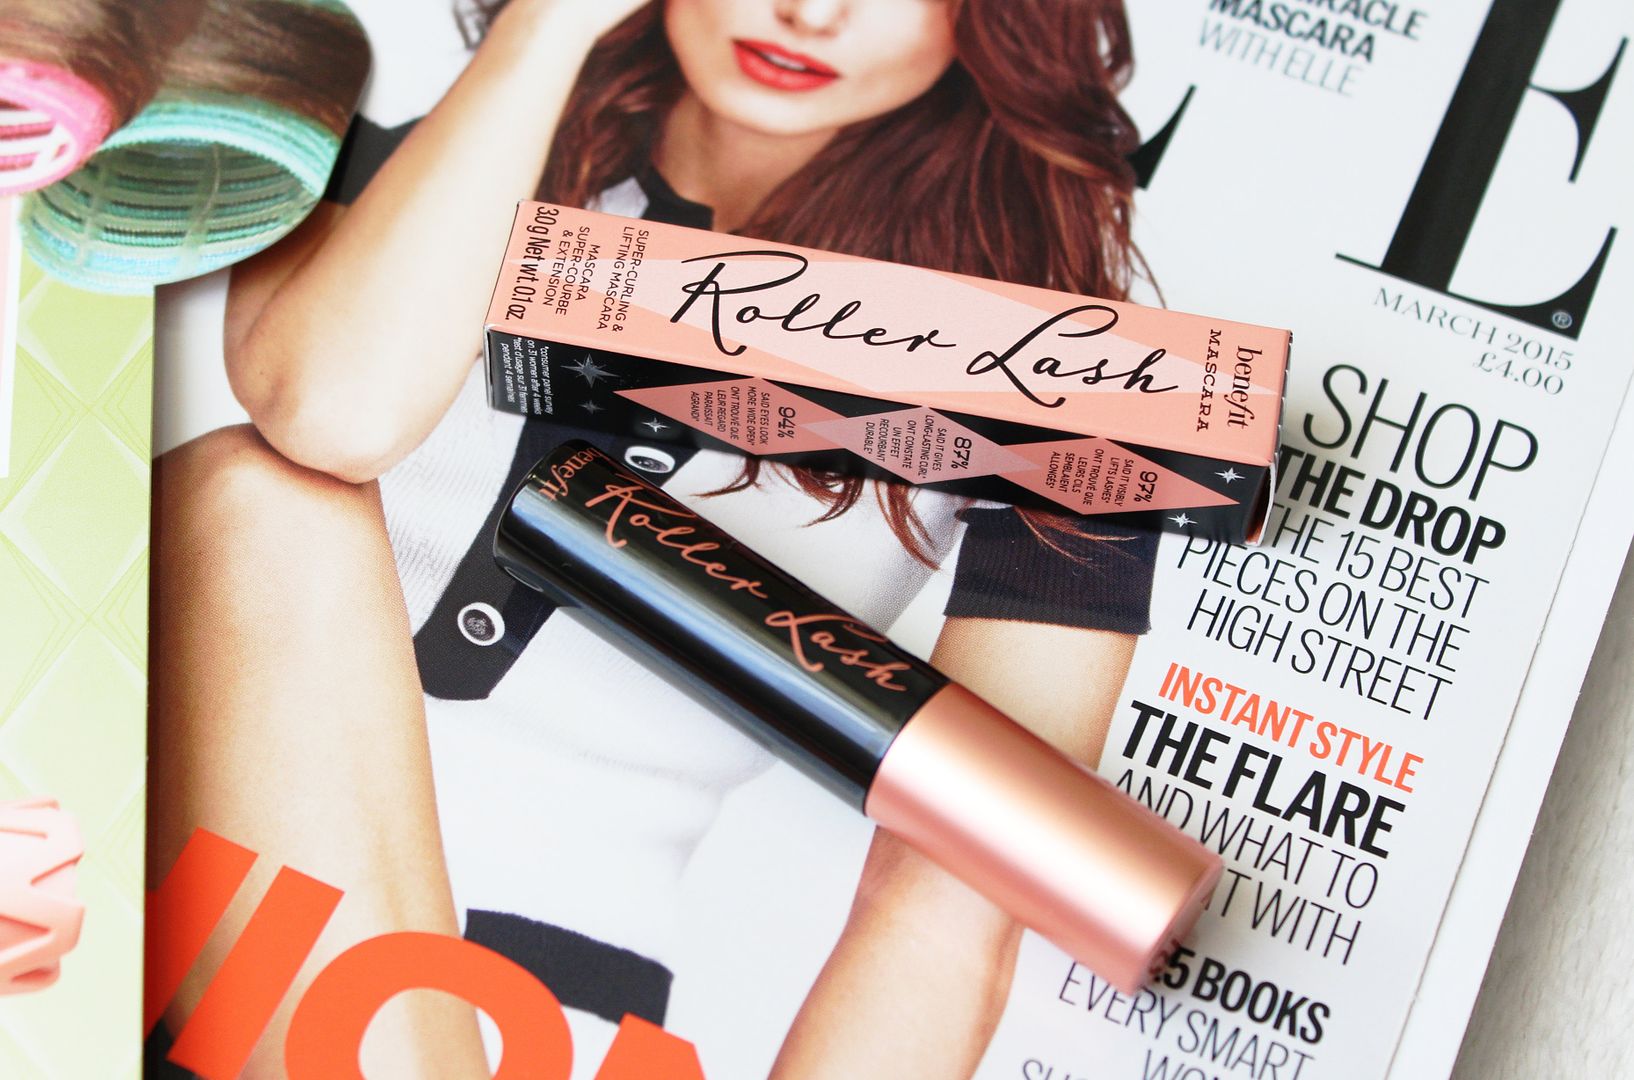 Benefit-Roller-Lash-Mascara-Elle-Magazine-March-2015-Review-Packaging-Belle-Amie-UK-Beauty-Fashion-Lifestyle-Blog